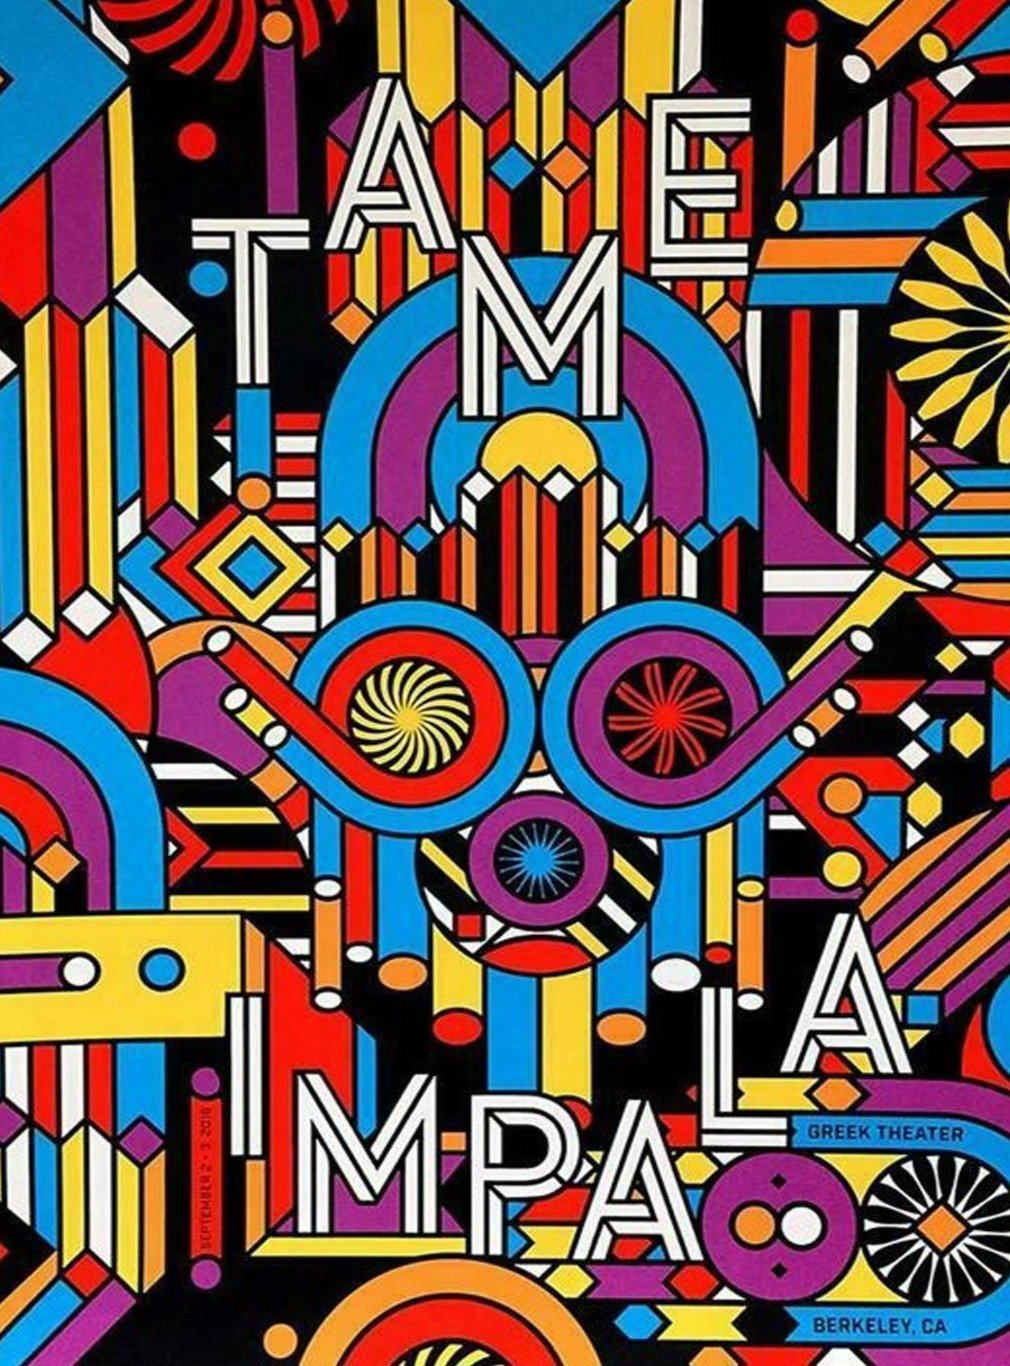 Tame Impala - Greek Theatre - Printed Originals